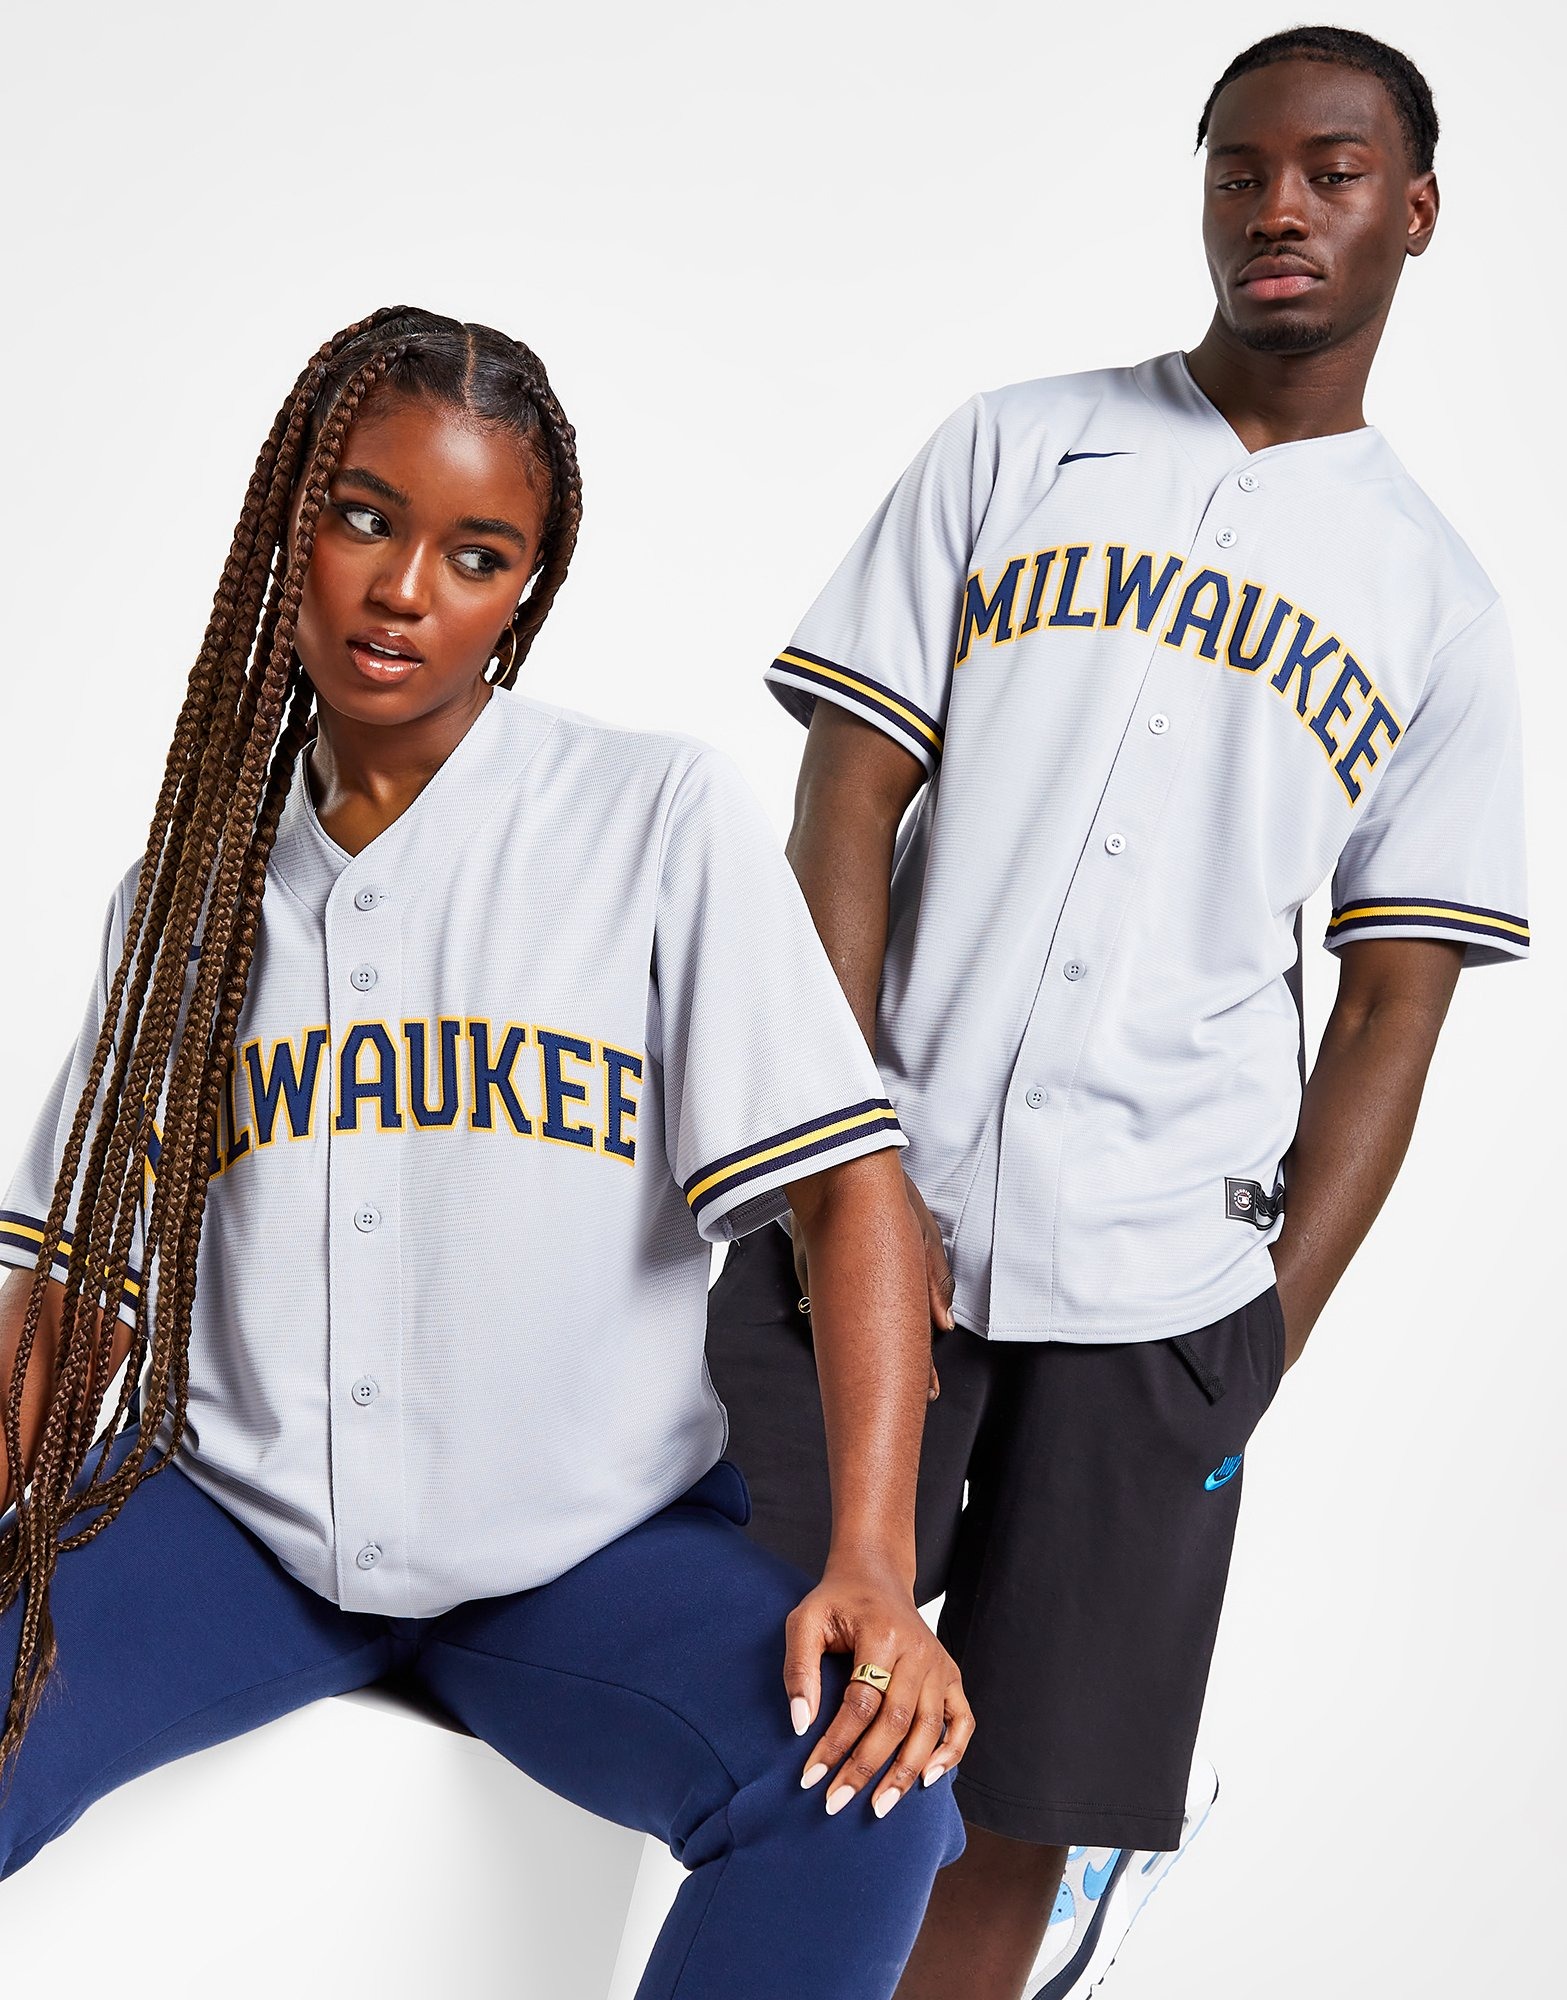 Milwaukee Brewers Throwback Jerseys, Vintage MLB Gear